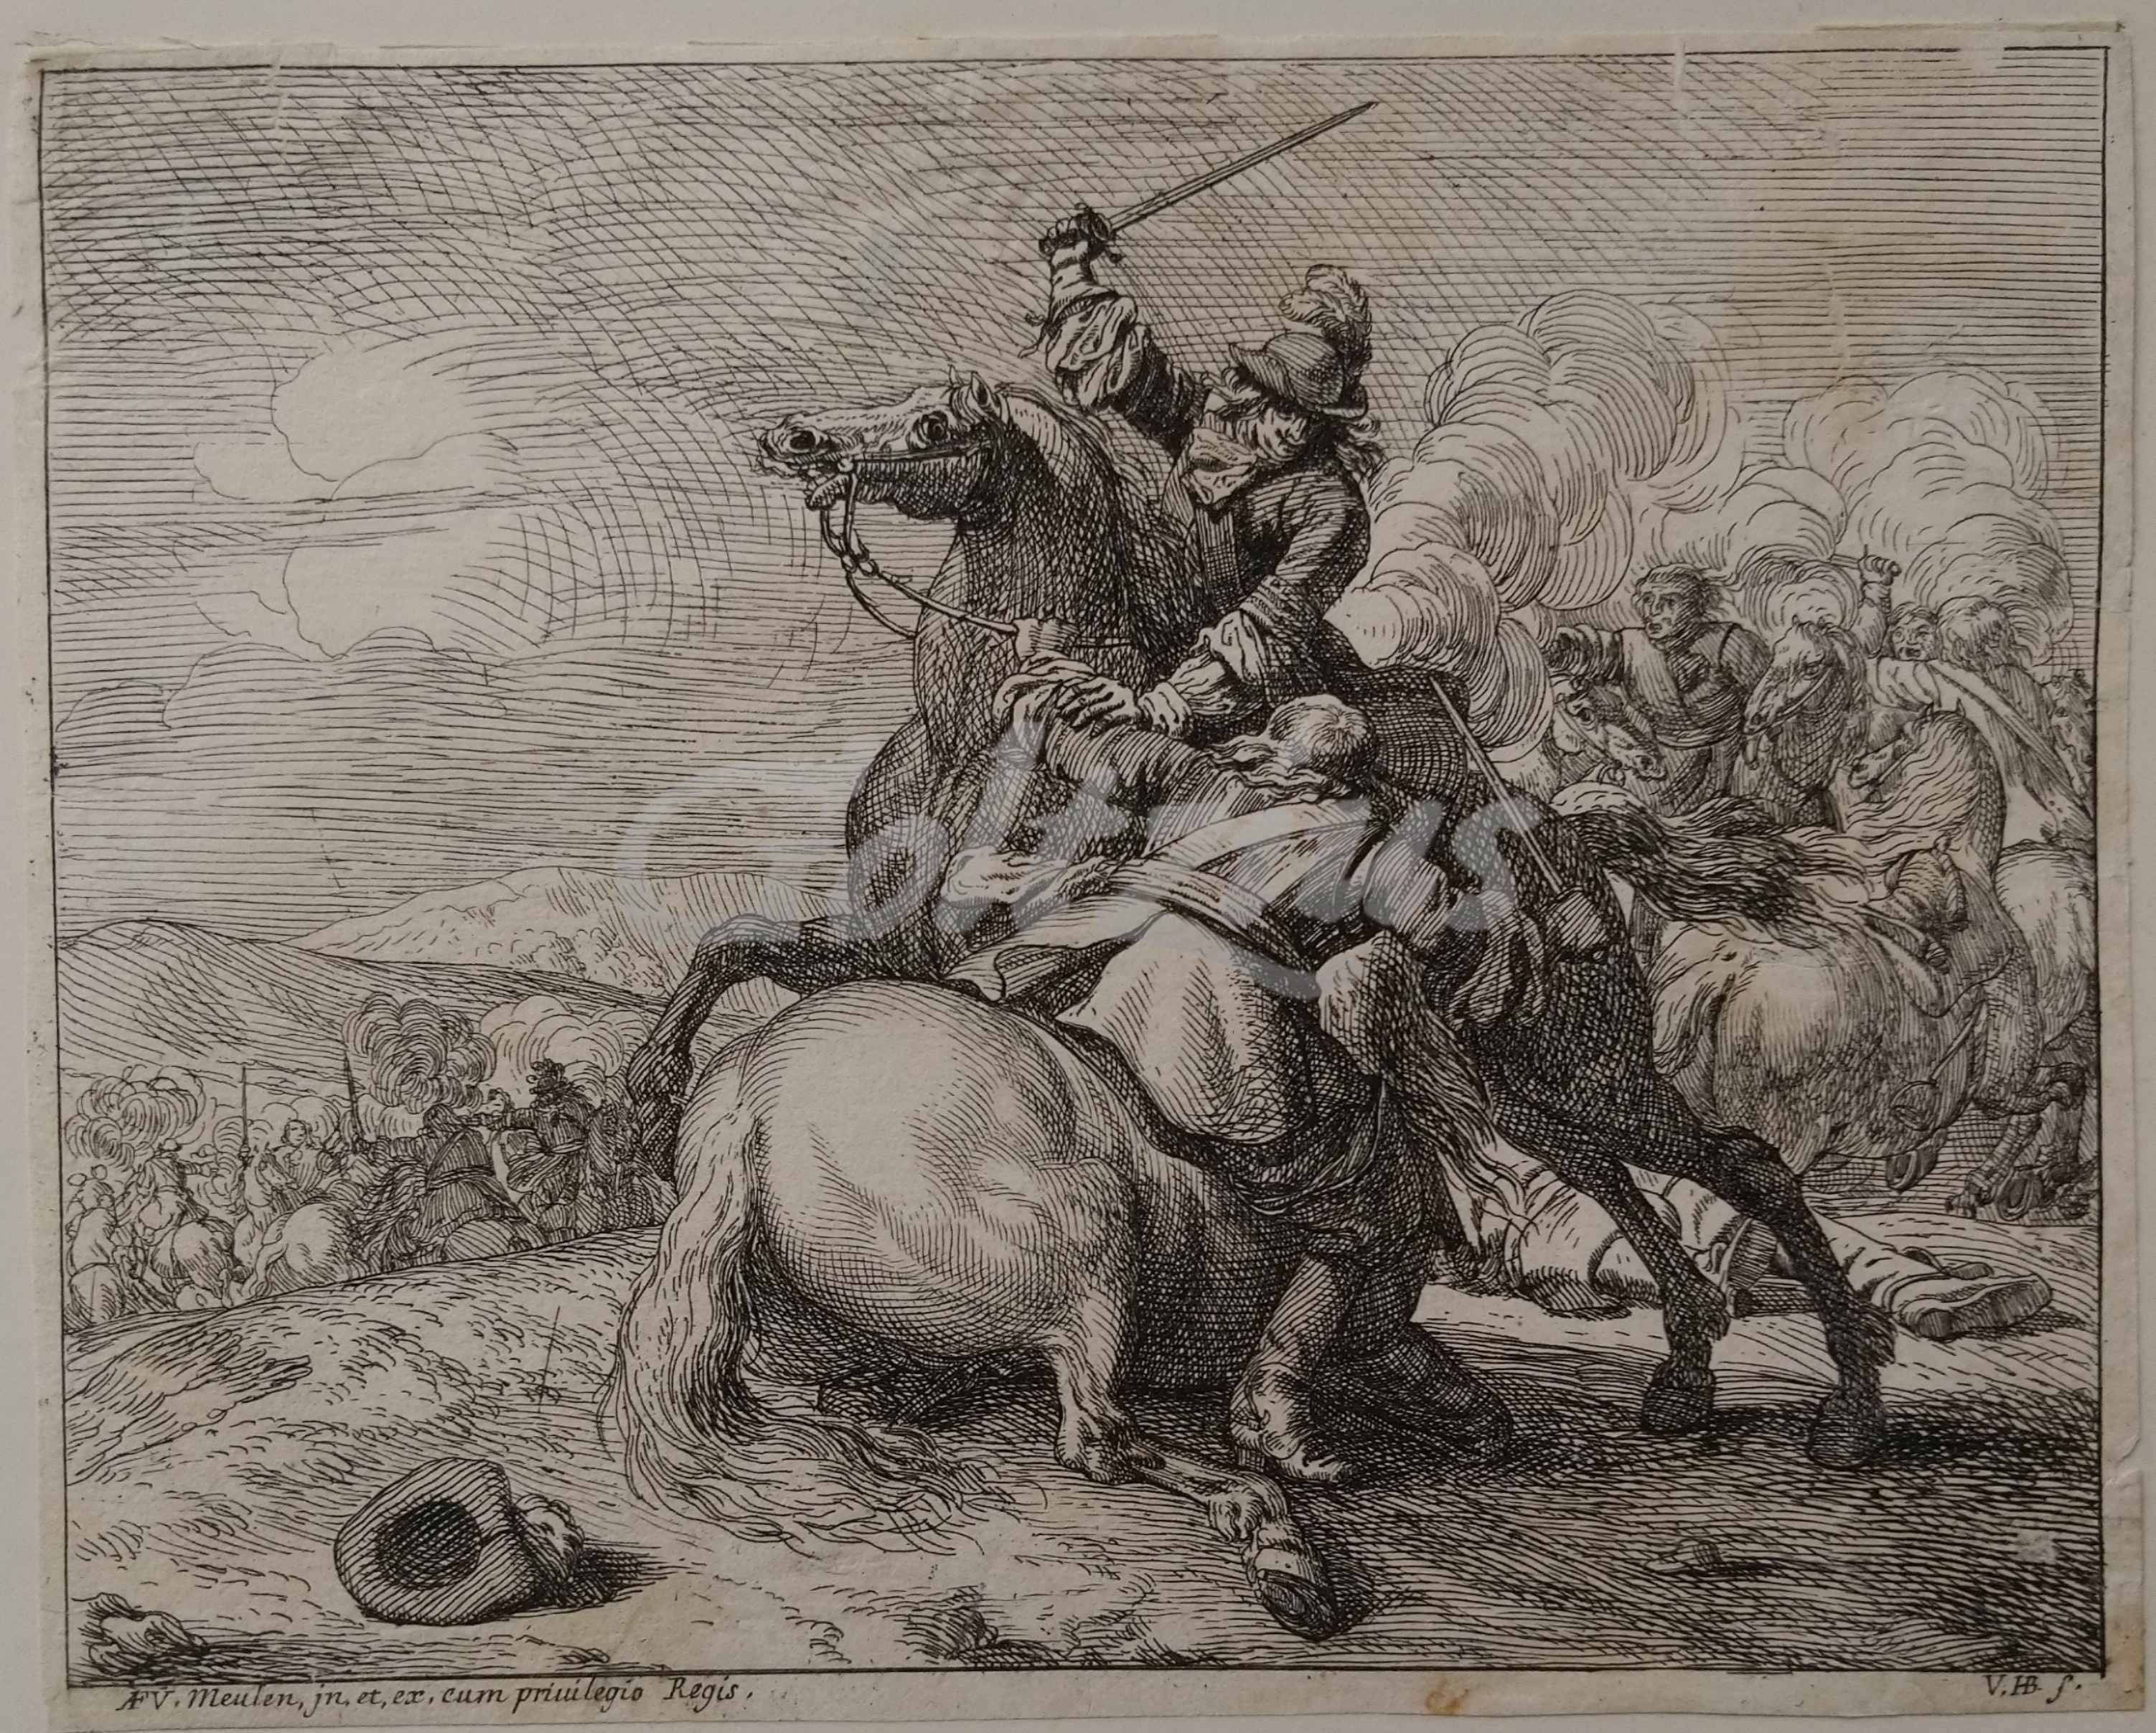 HUCHTENBURG, JAN VAN, Cavalry battle